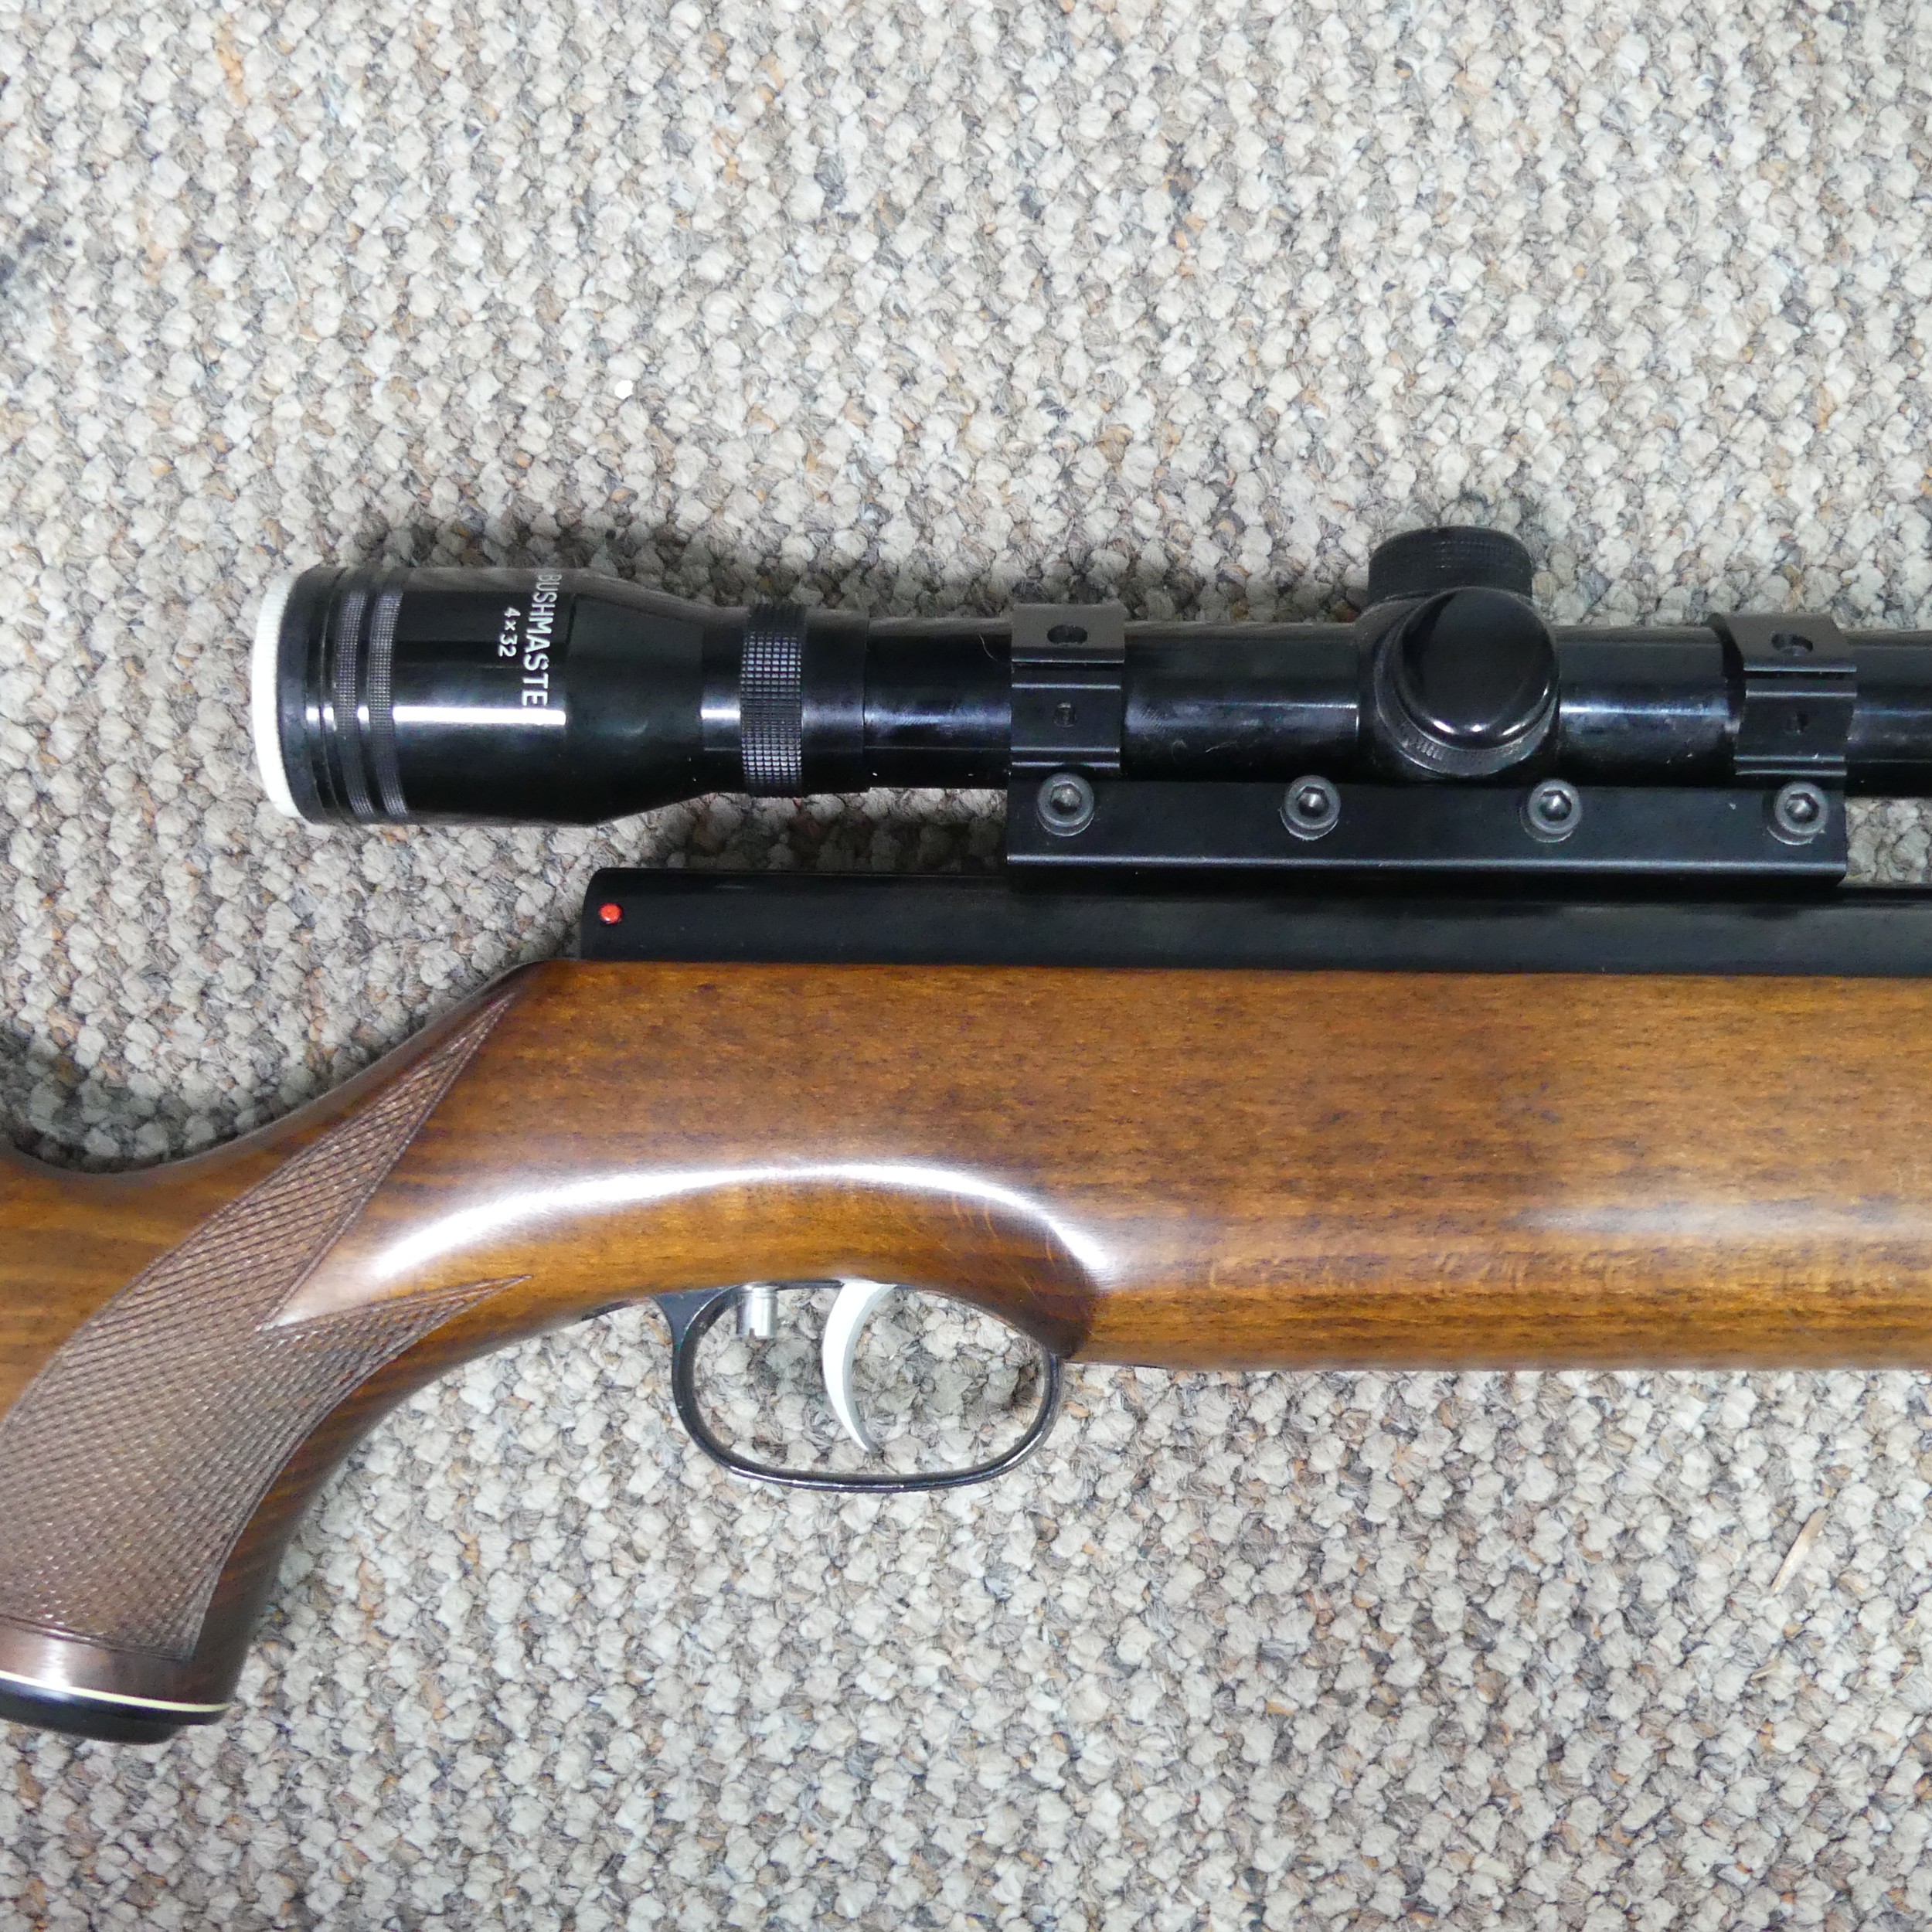 Weihrauch model HW 77 K .22 Air Rifle, with under lever action, beech stock with chequered pistol - Bild 5 aus 5